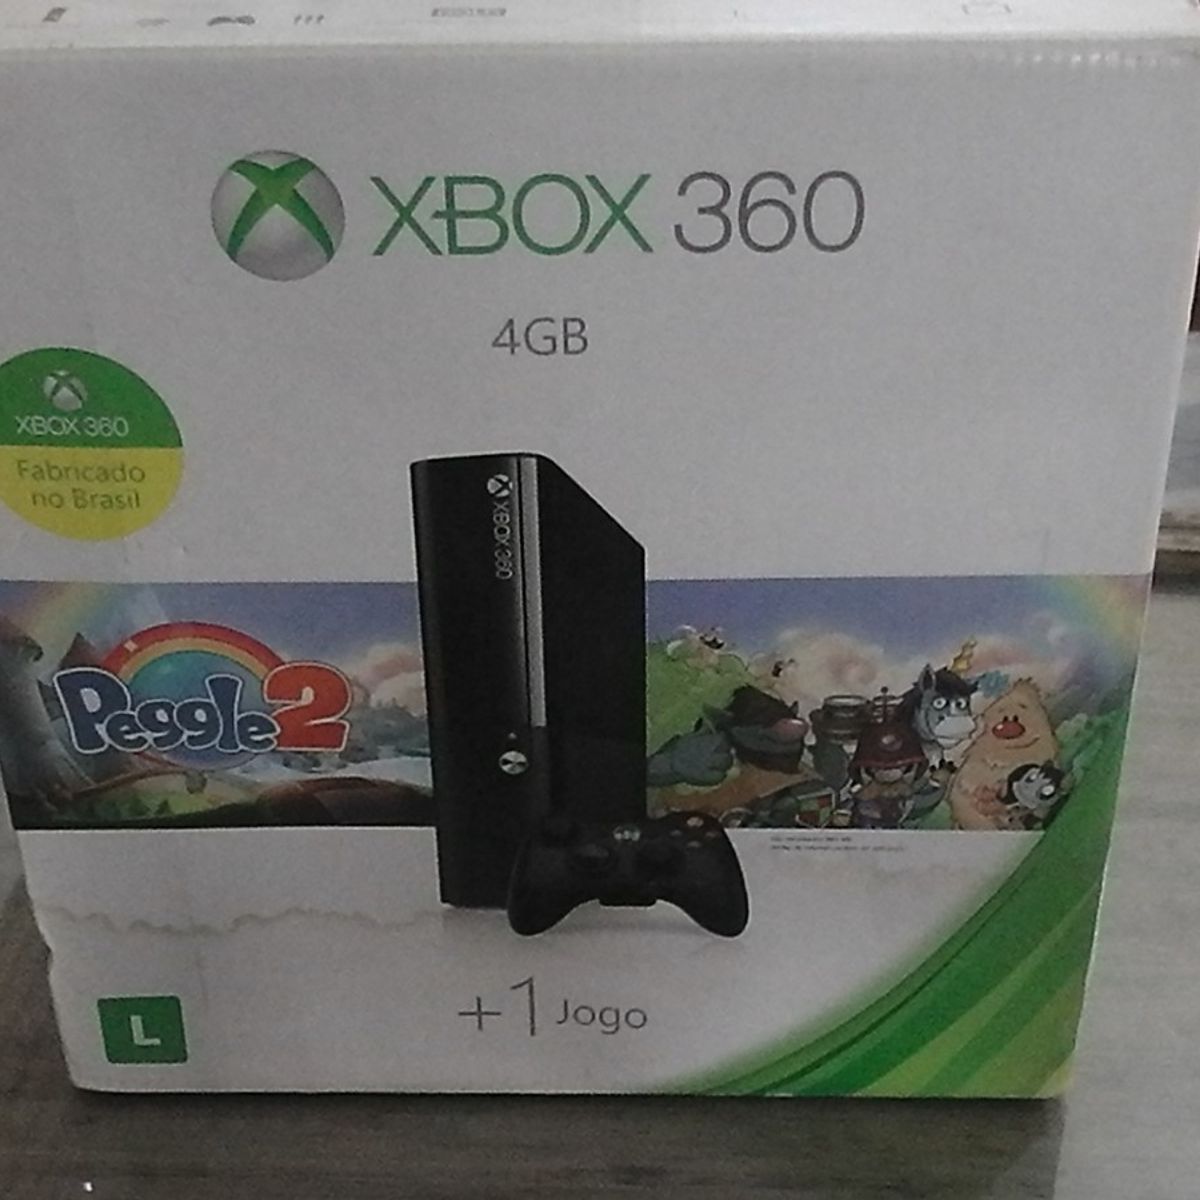 Console Xbox 360 bloqueado com 1 controle e os cabos